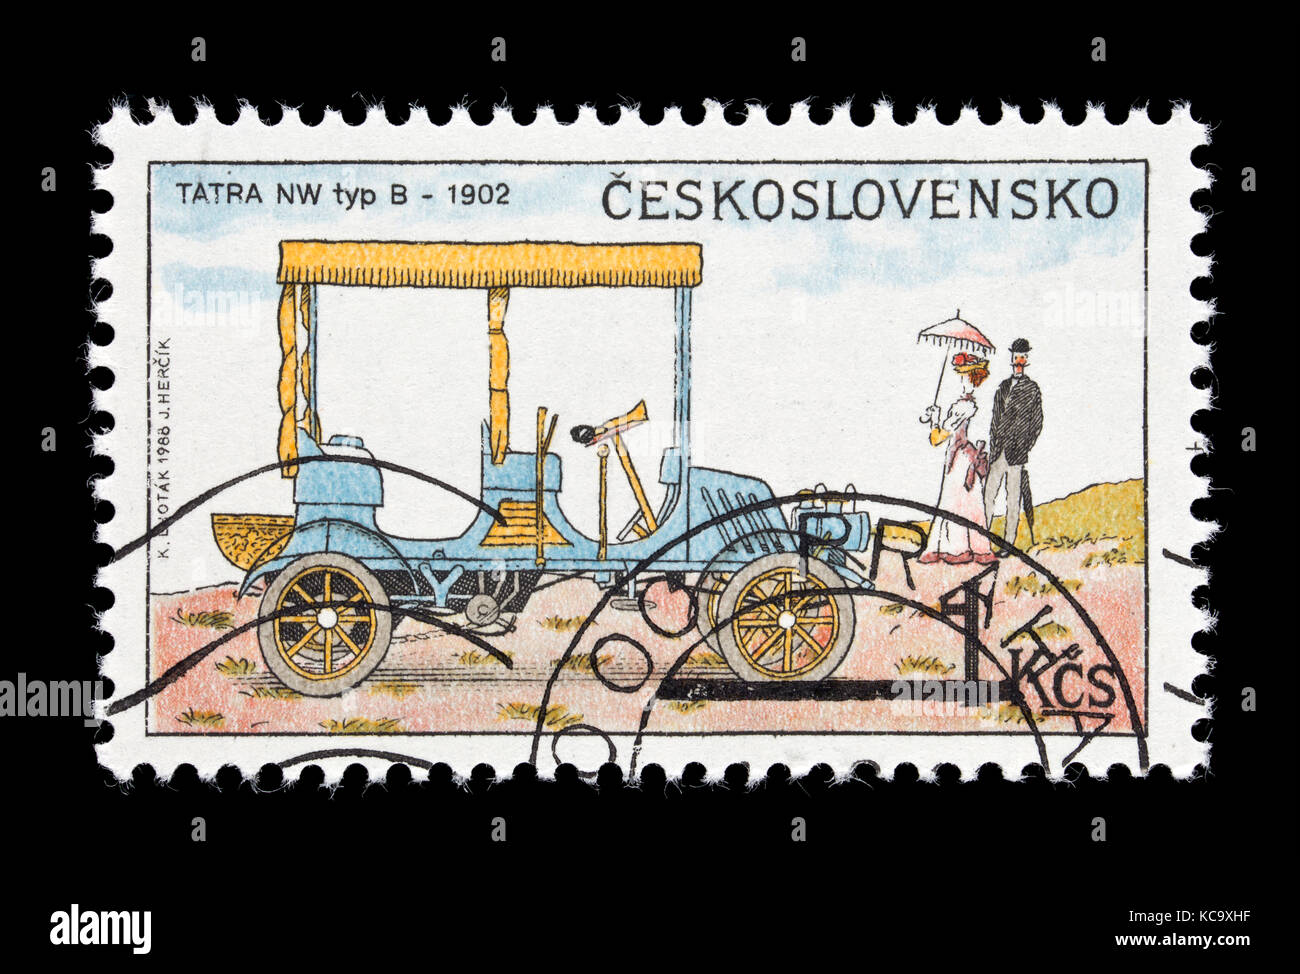 Postage stamp from Czechoslovakia depicting a 1902 Tatra NWType B classic automobile. Stock Photo